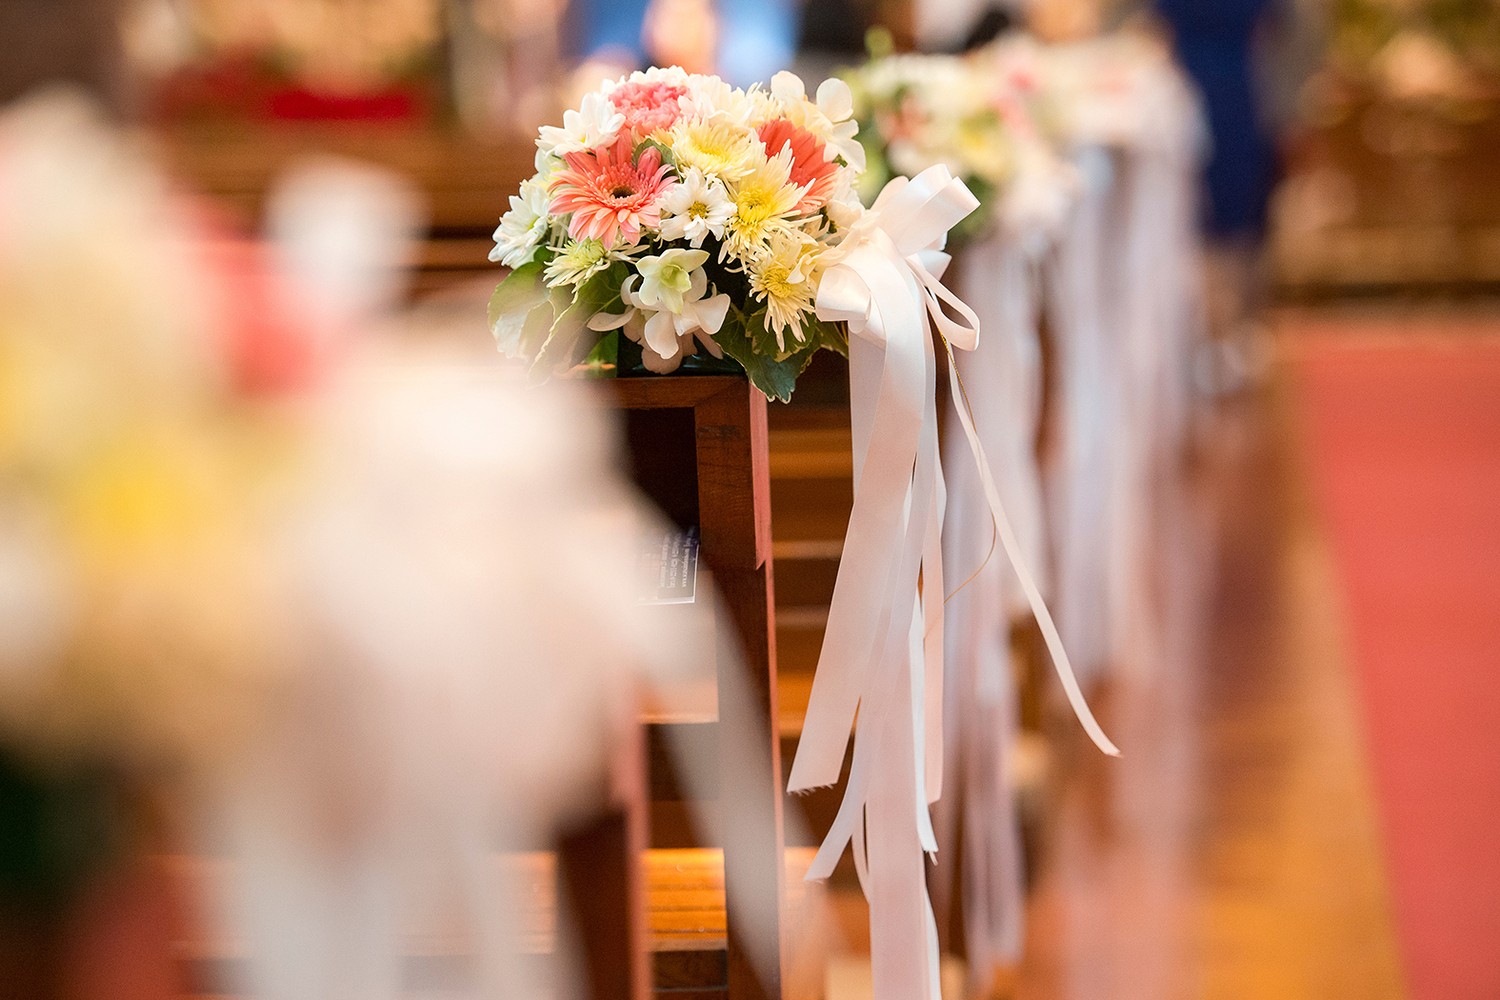 Christian wedding flower and decoration 